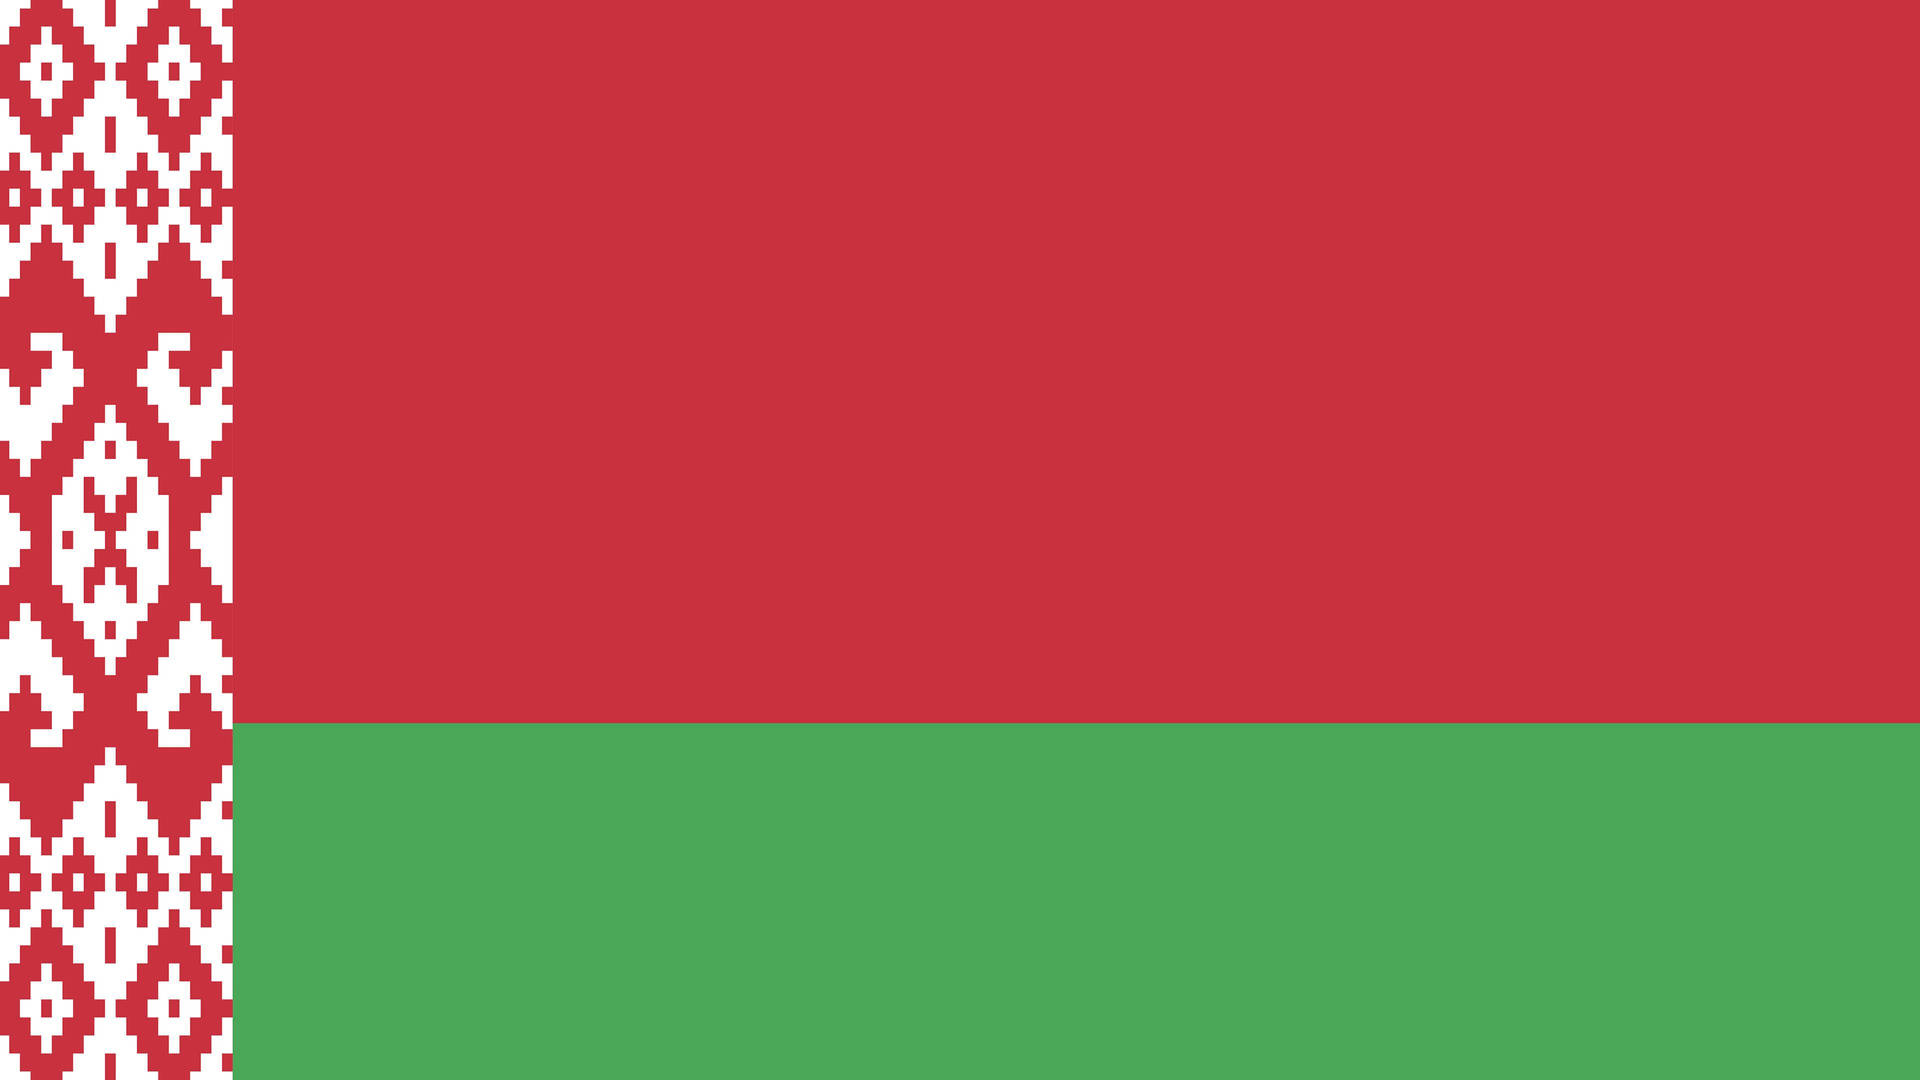 Simple Faded Belarus Flag Wallpaper